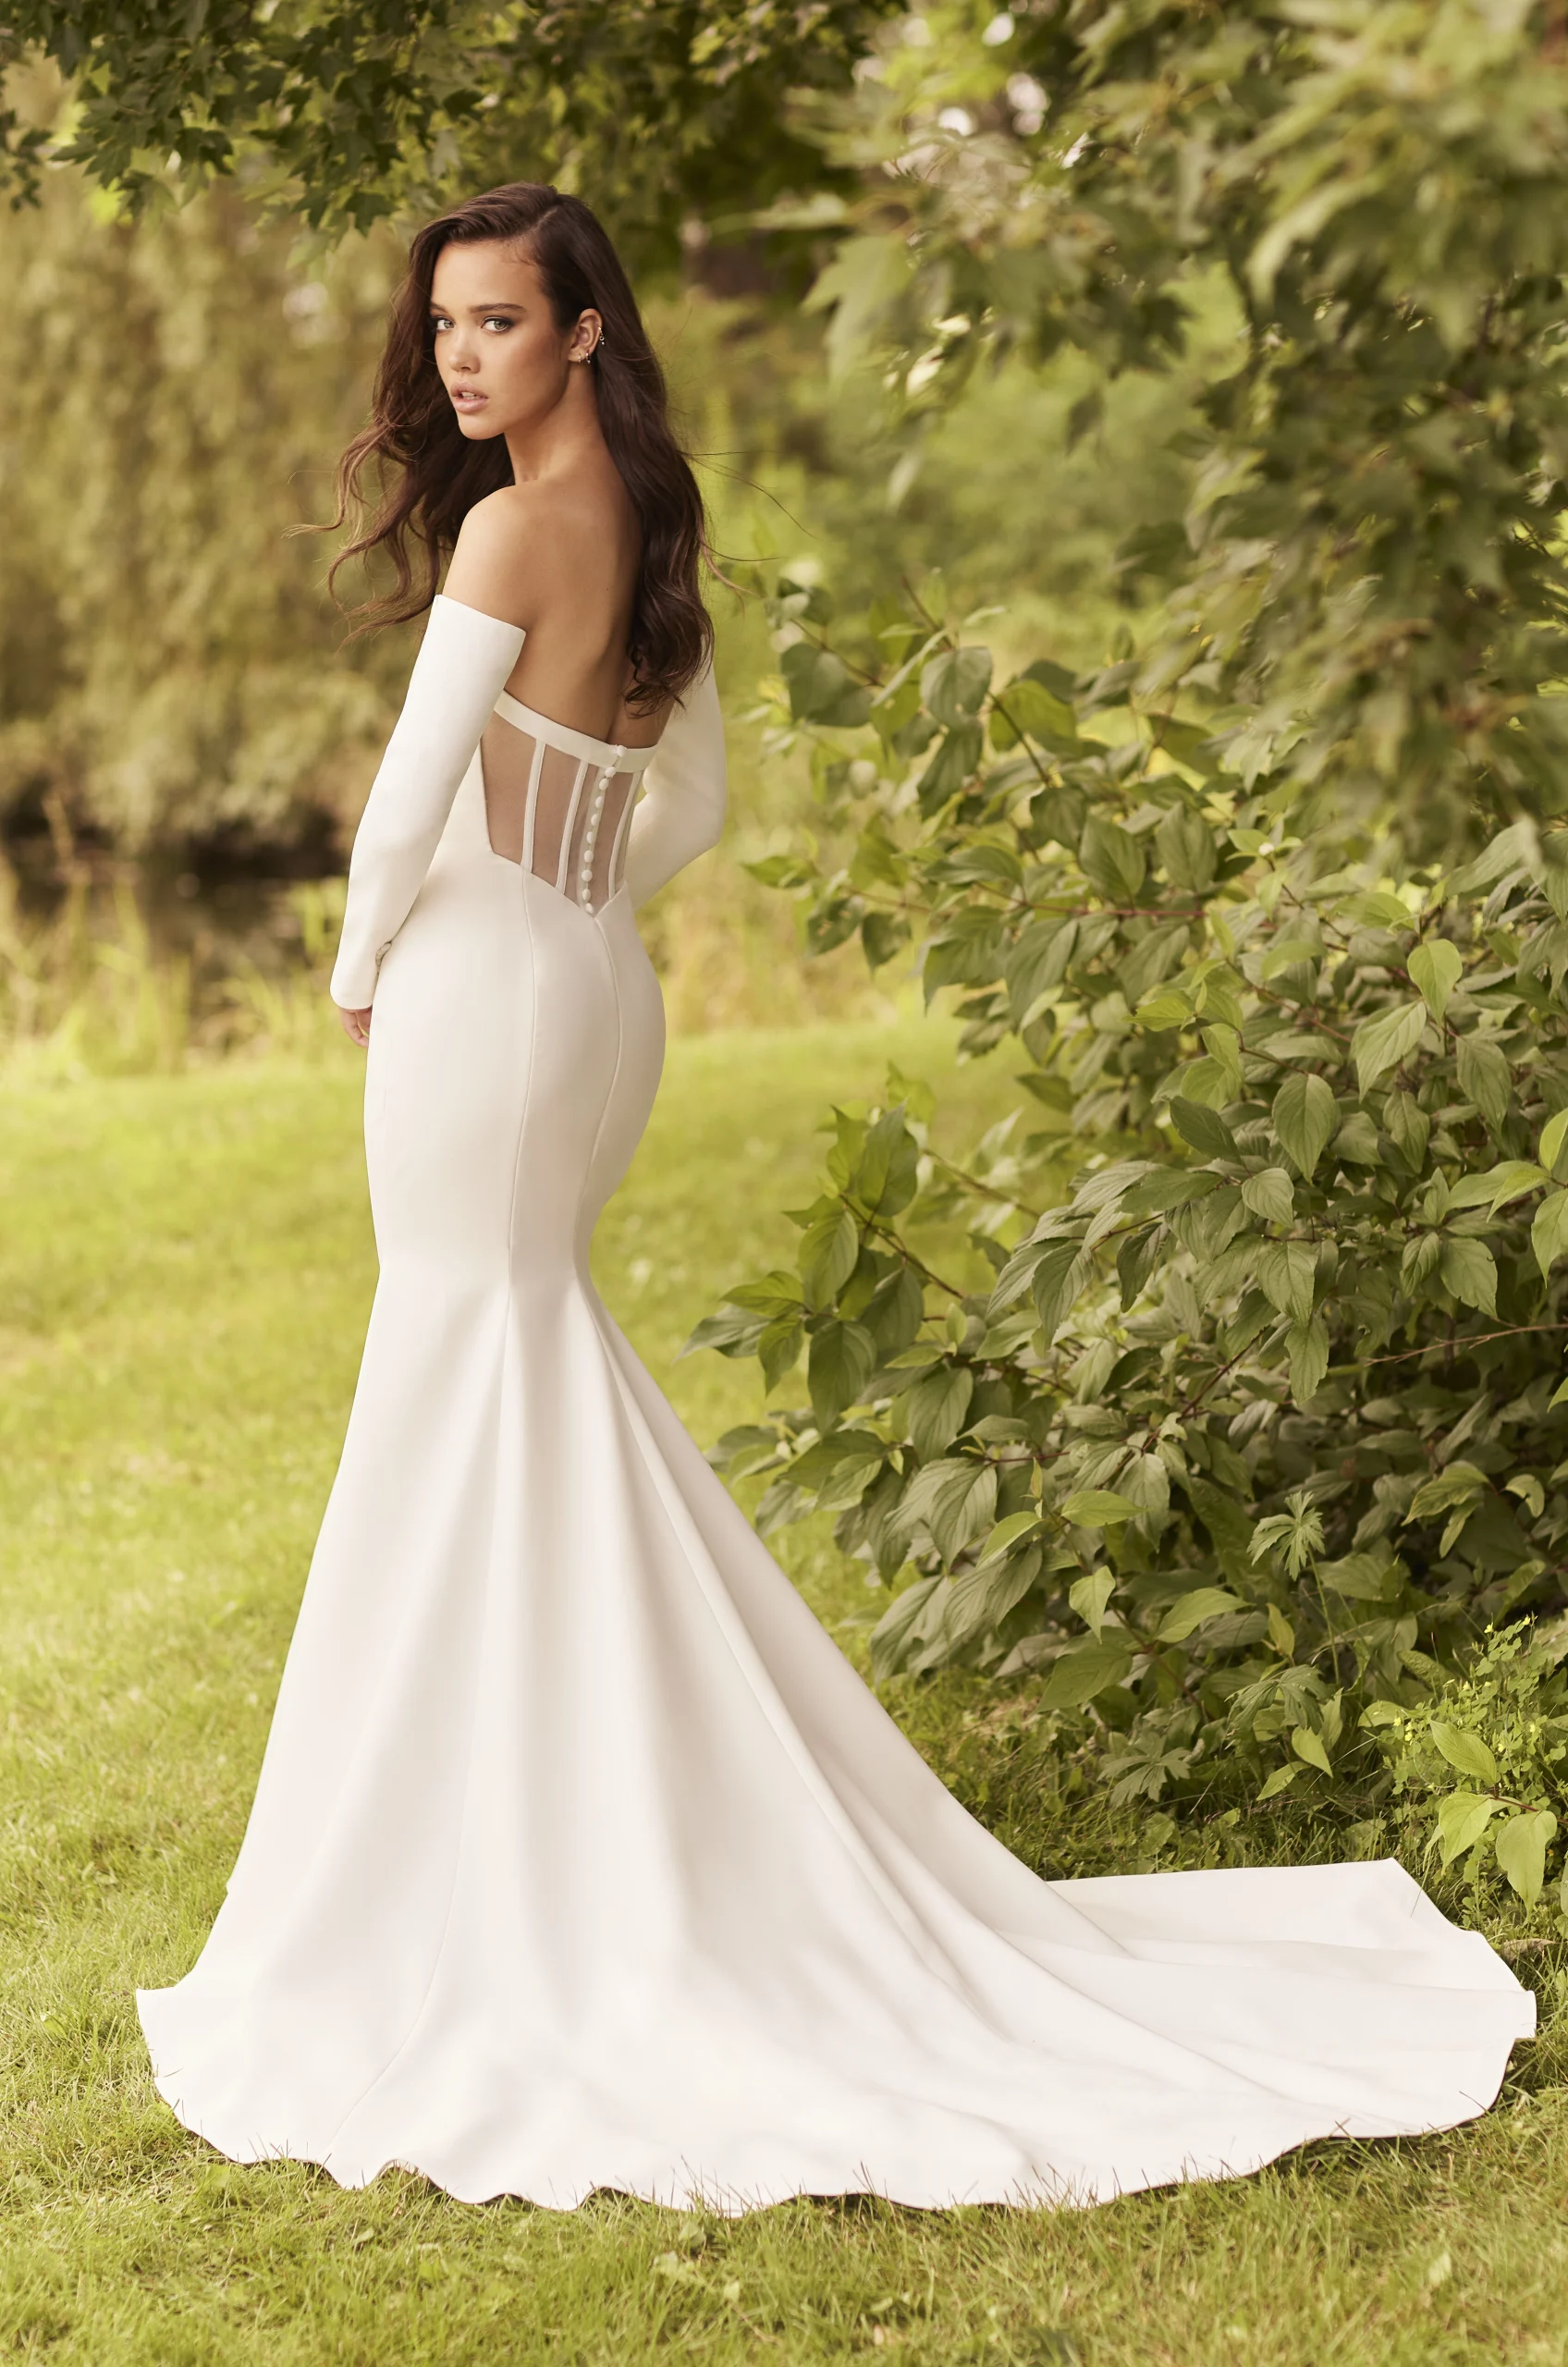 Chic Crepe Long Sleeve Wedding Dress - Style #P5083 from Paloma Blanca